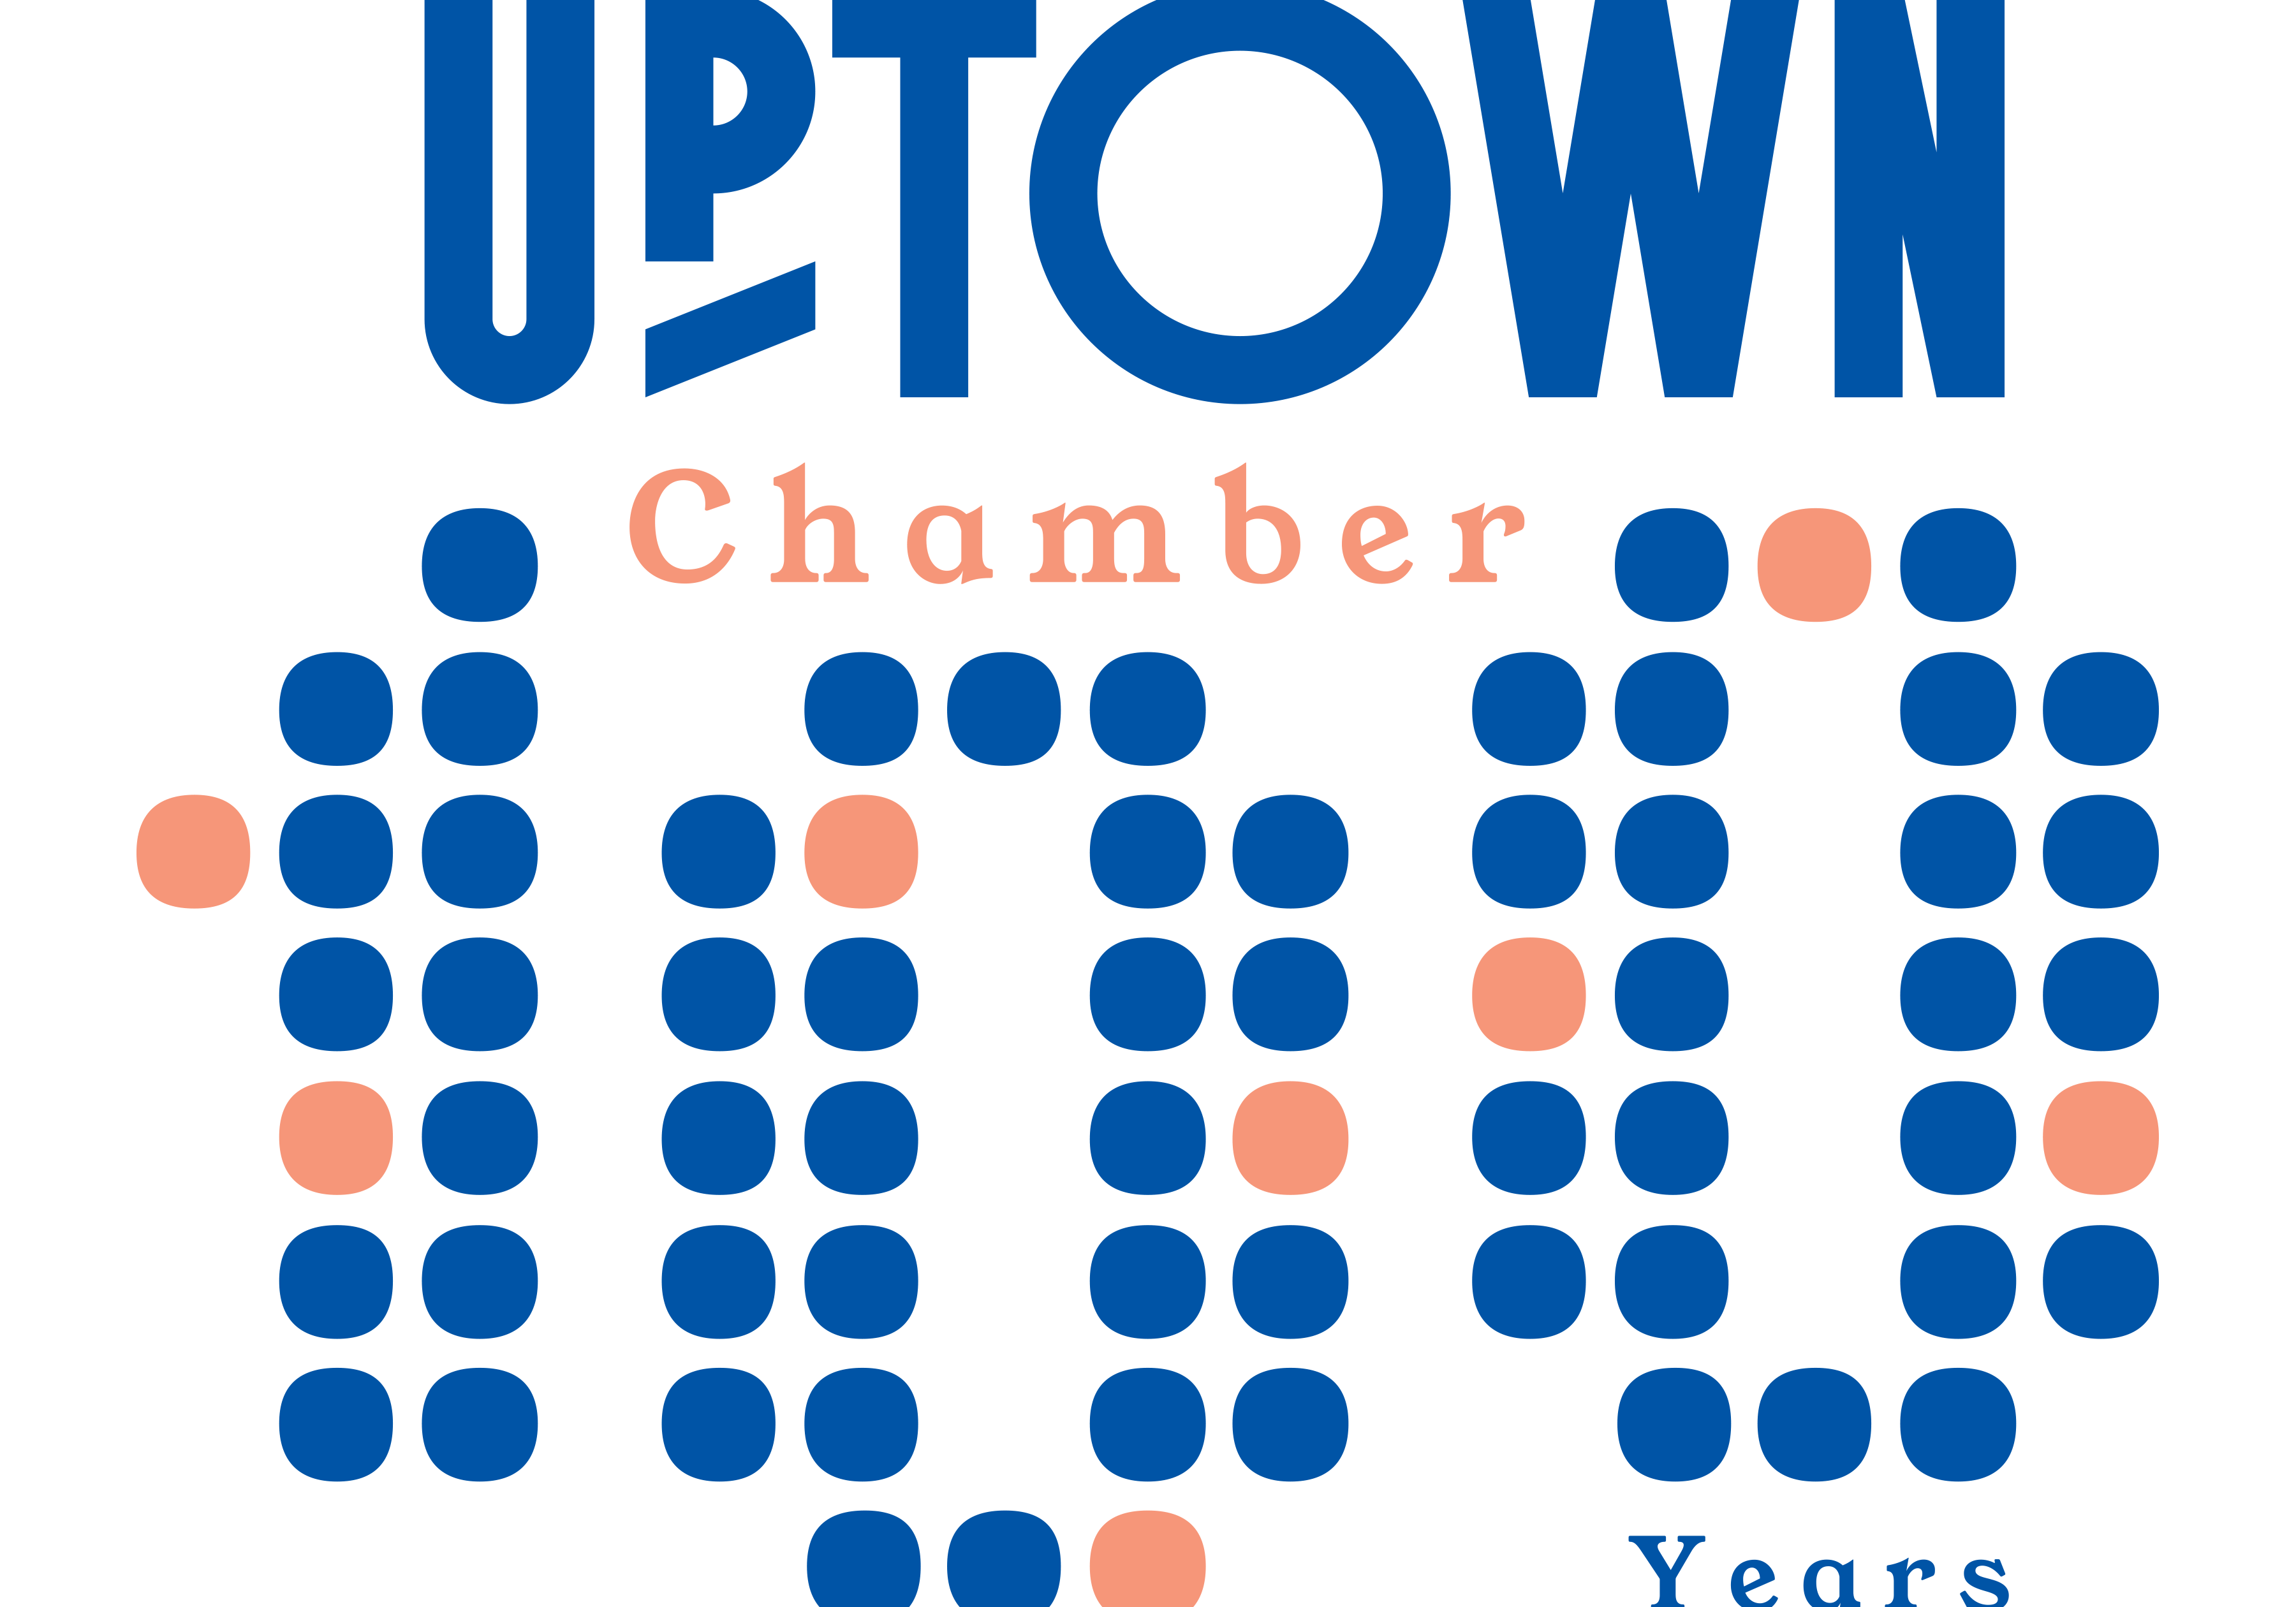 uptown 100 years logo